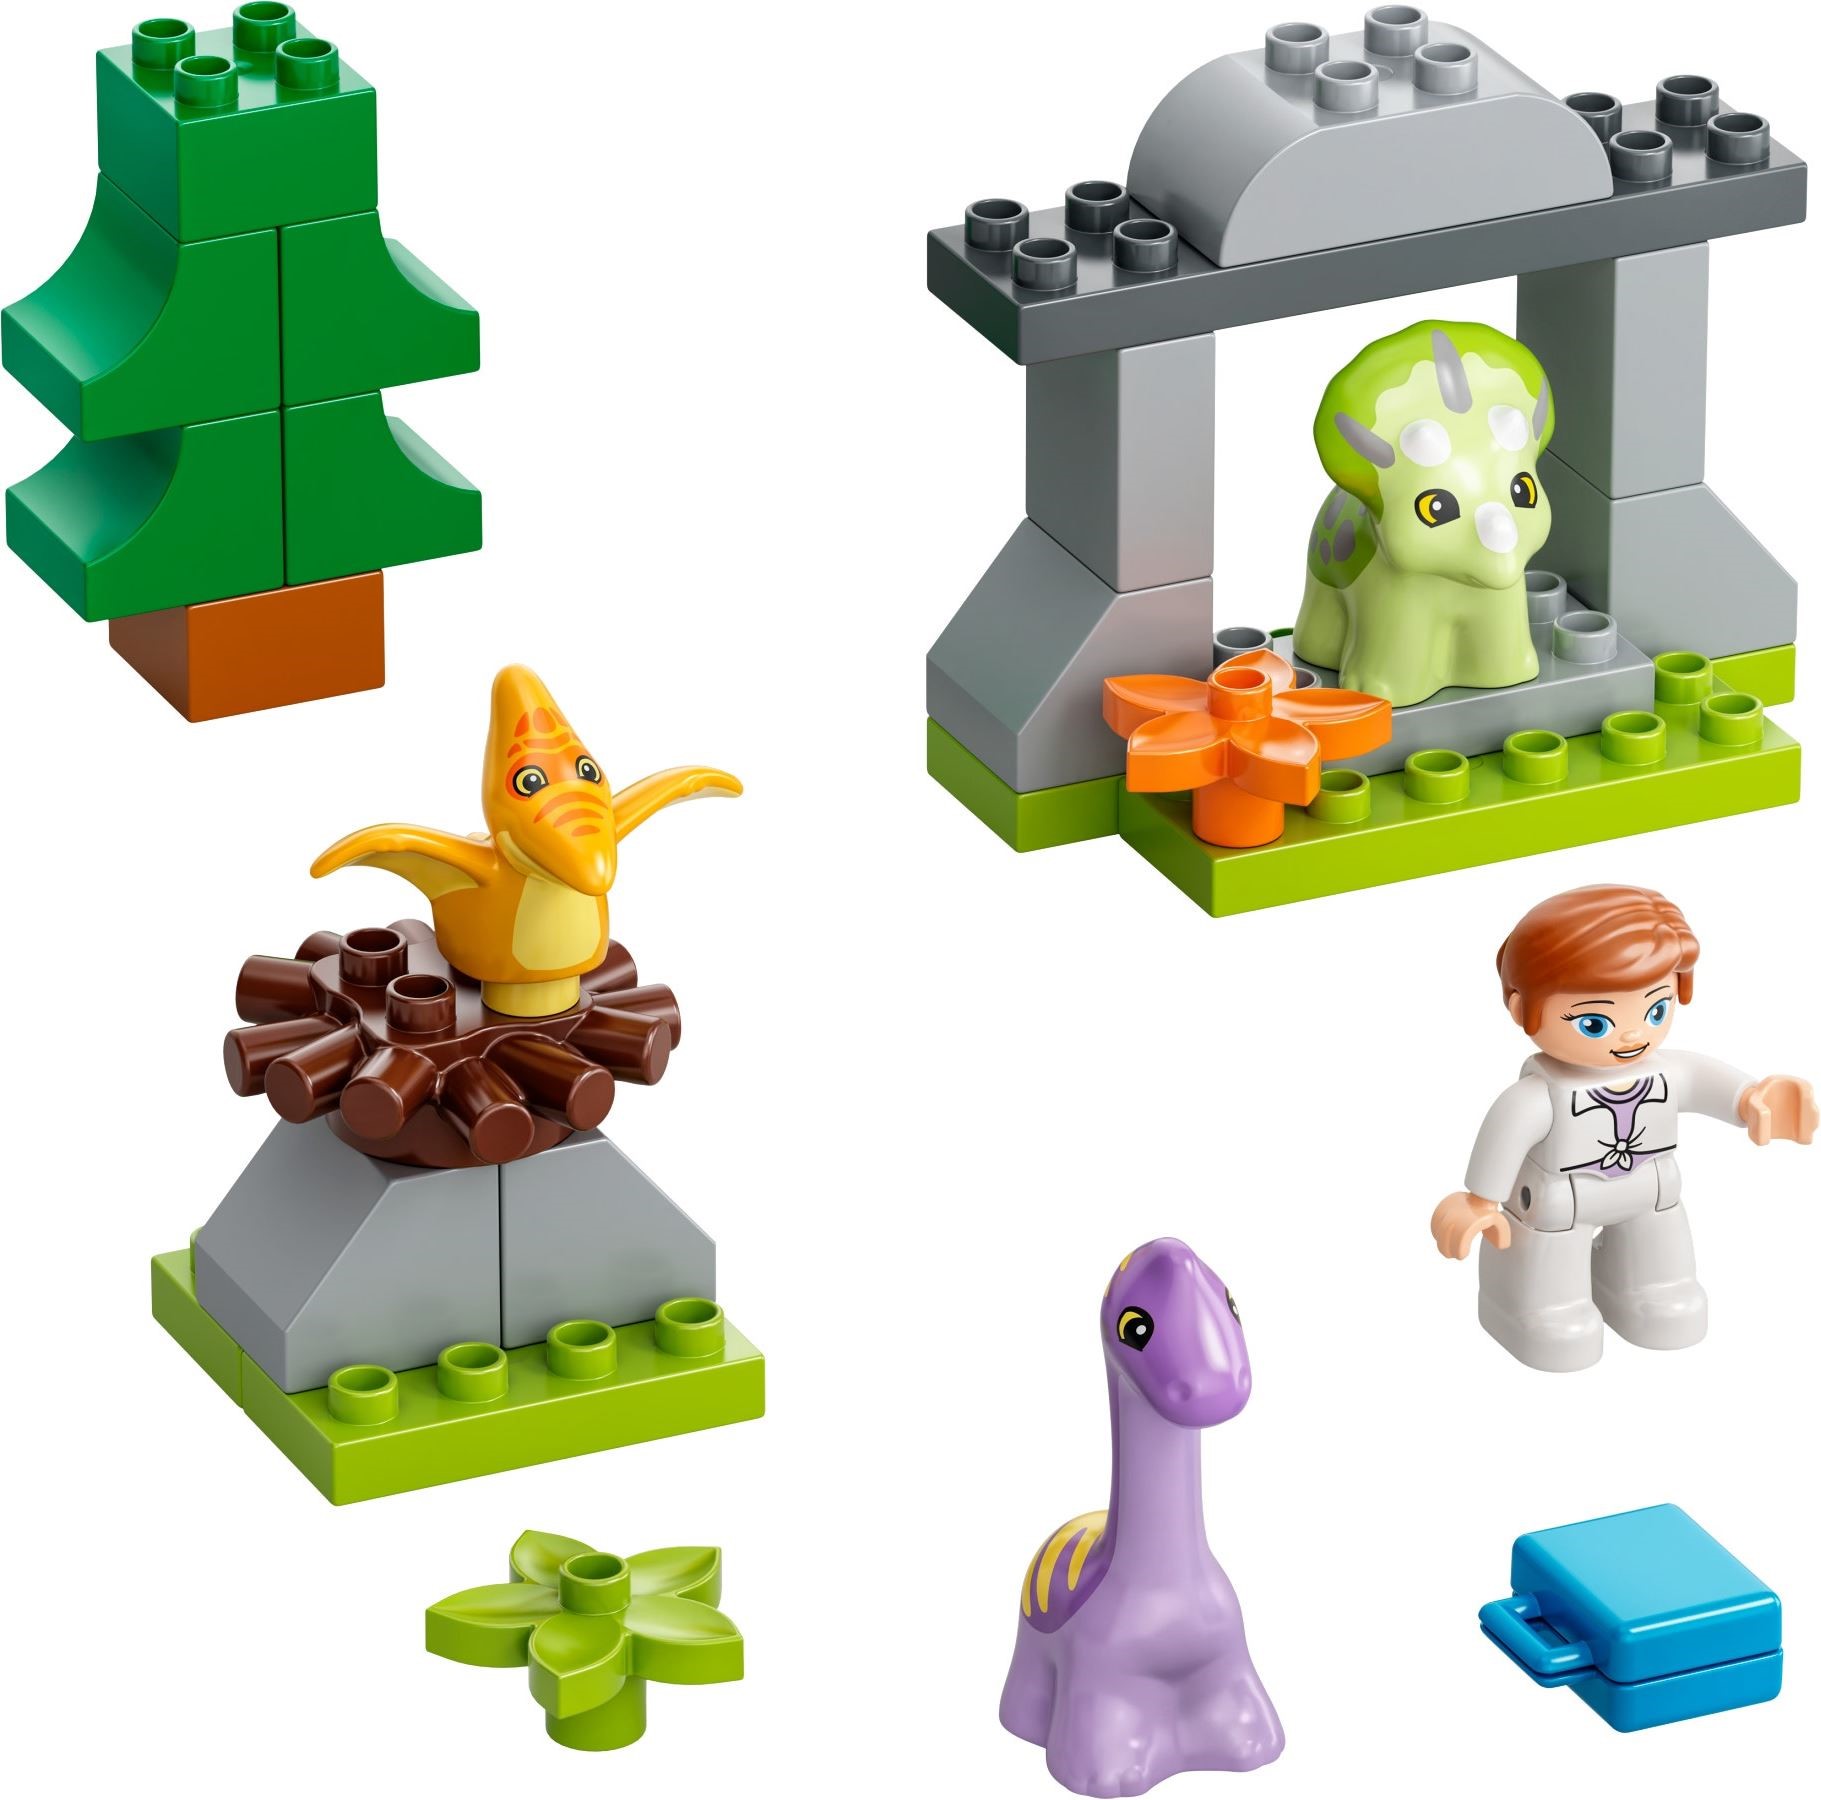 LEGO Jurassic World (SWITCH) pas cher - Prix 9,97€